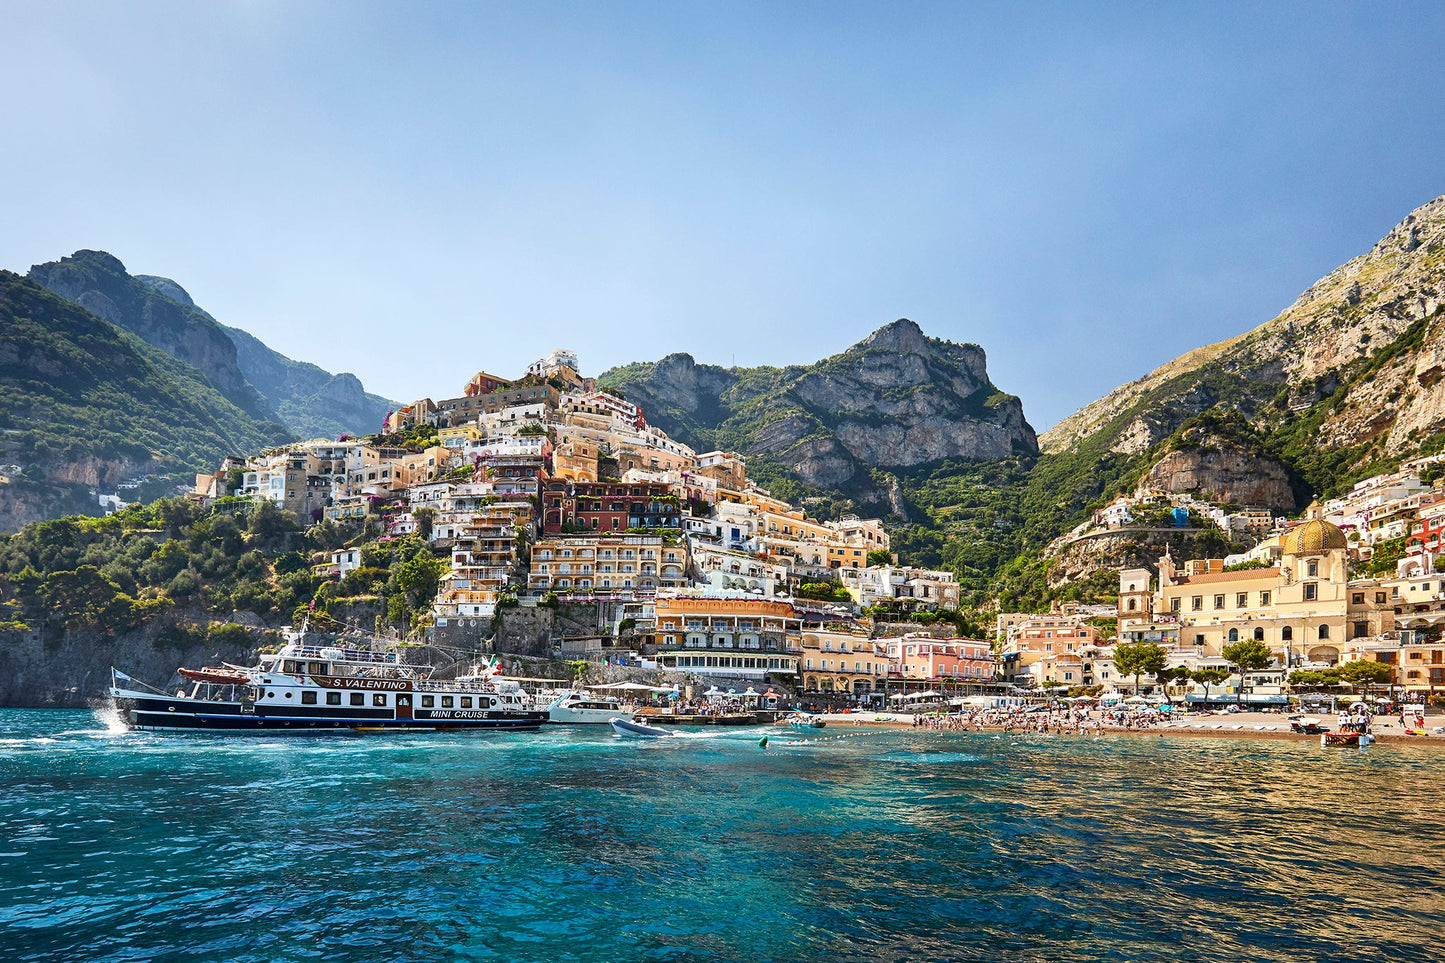 Mediterranean magic - Positano, Amalfi Coast Italy